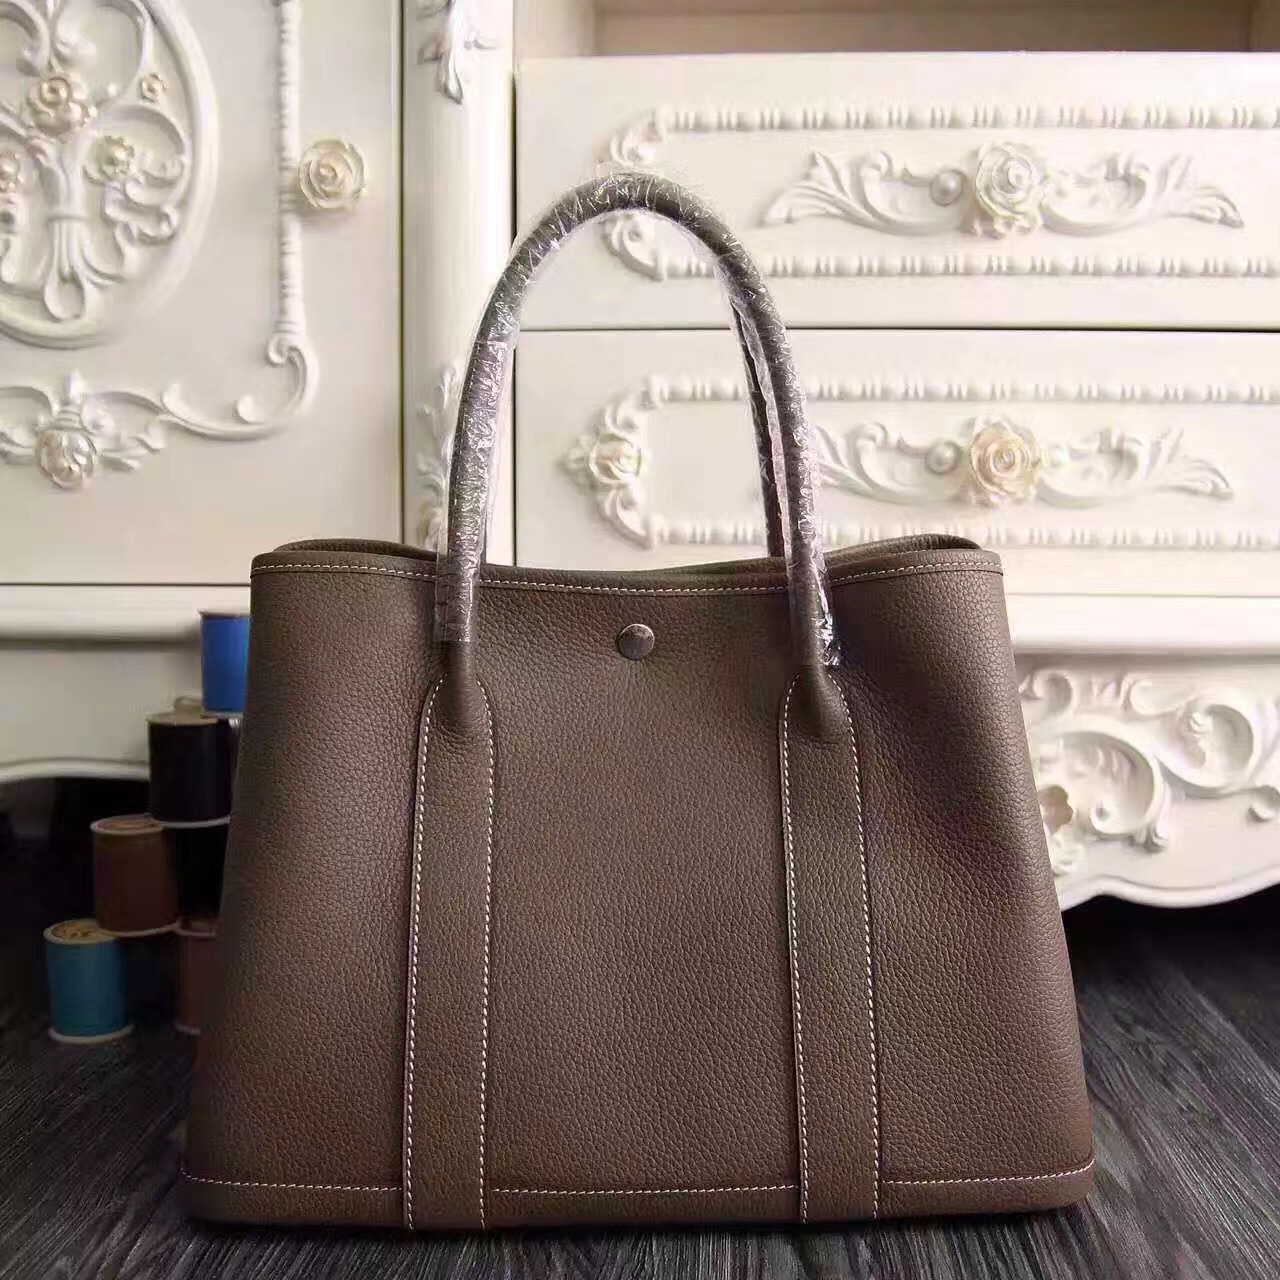 Hermes Garden Party gray top leather handbags